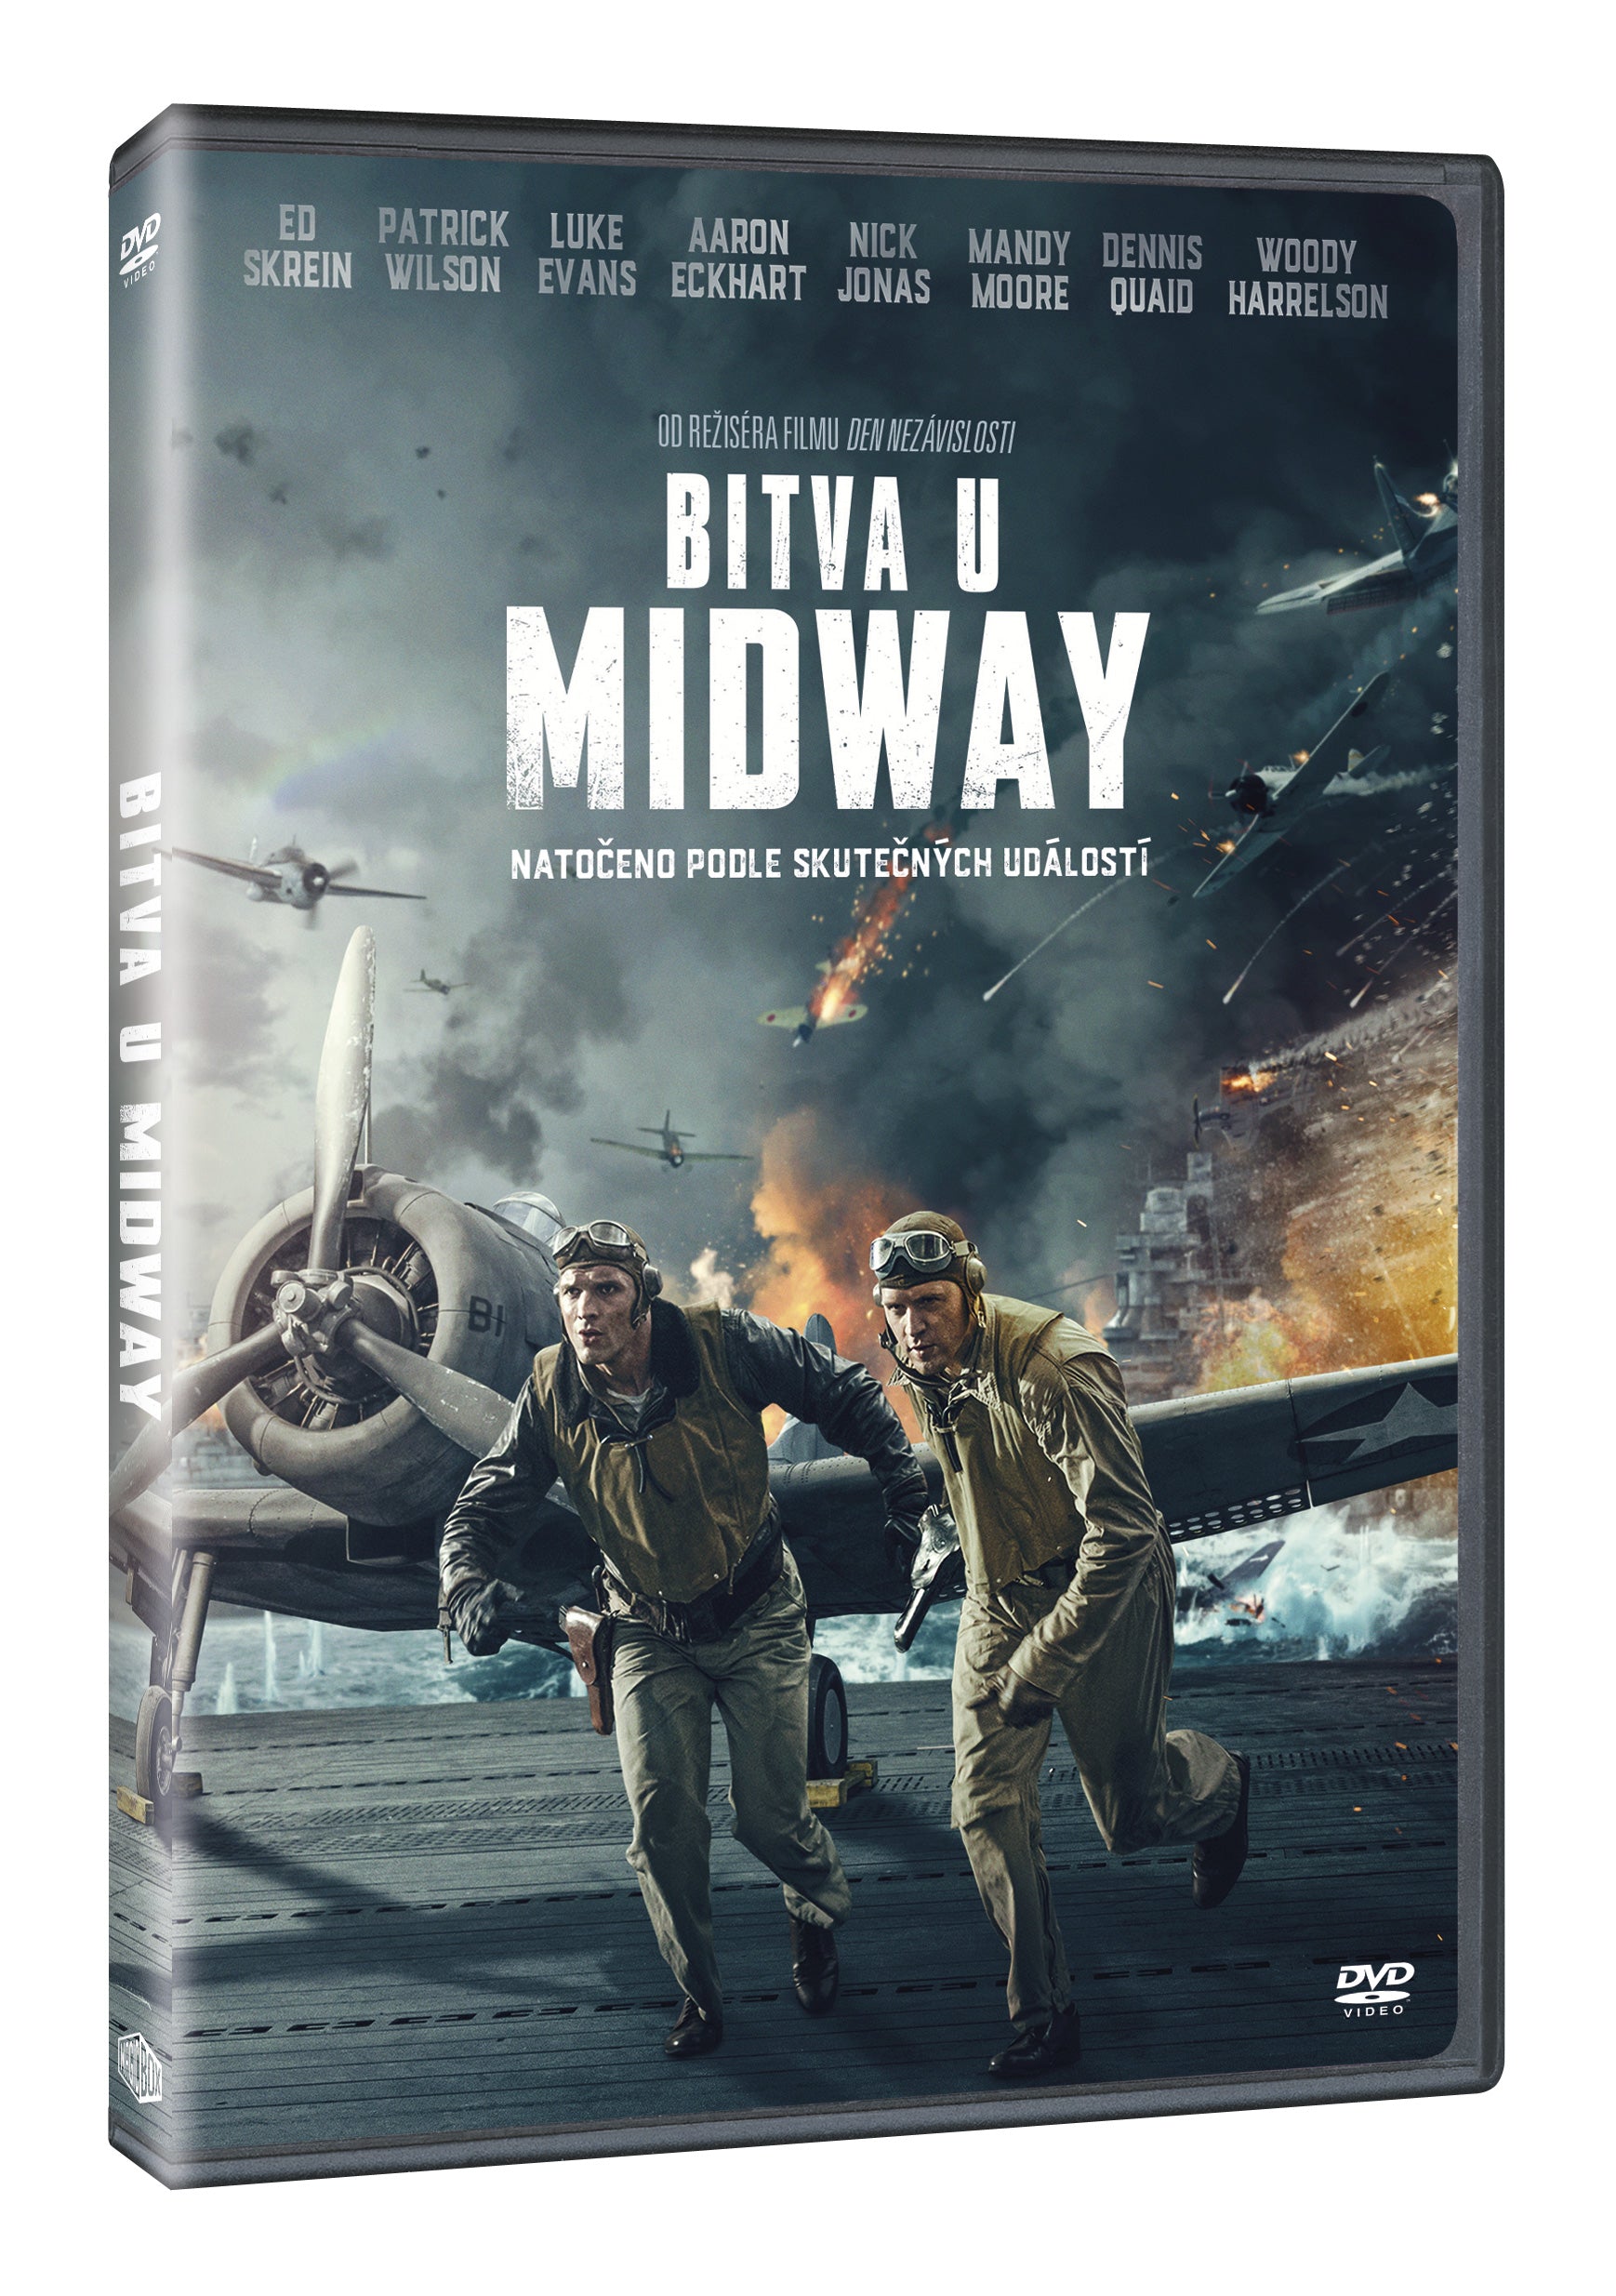 Bitva u Midway DVD / Midway